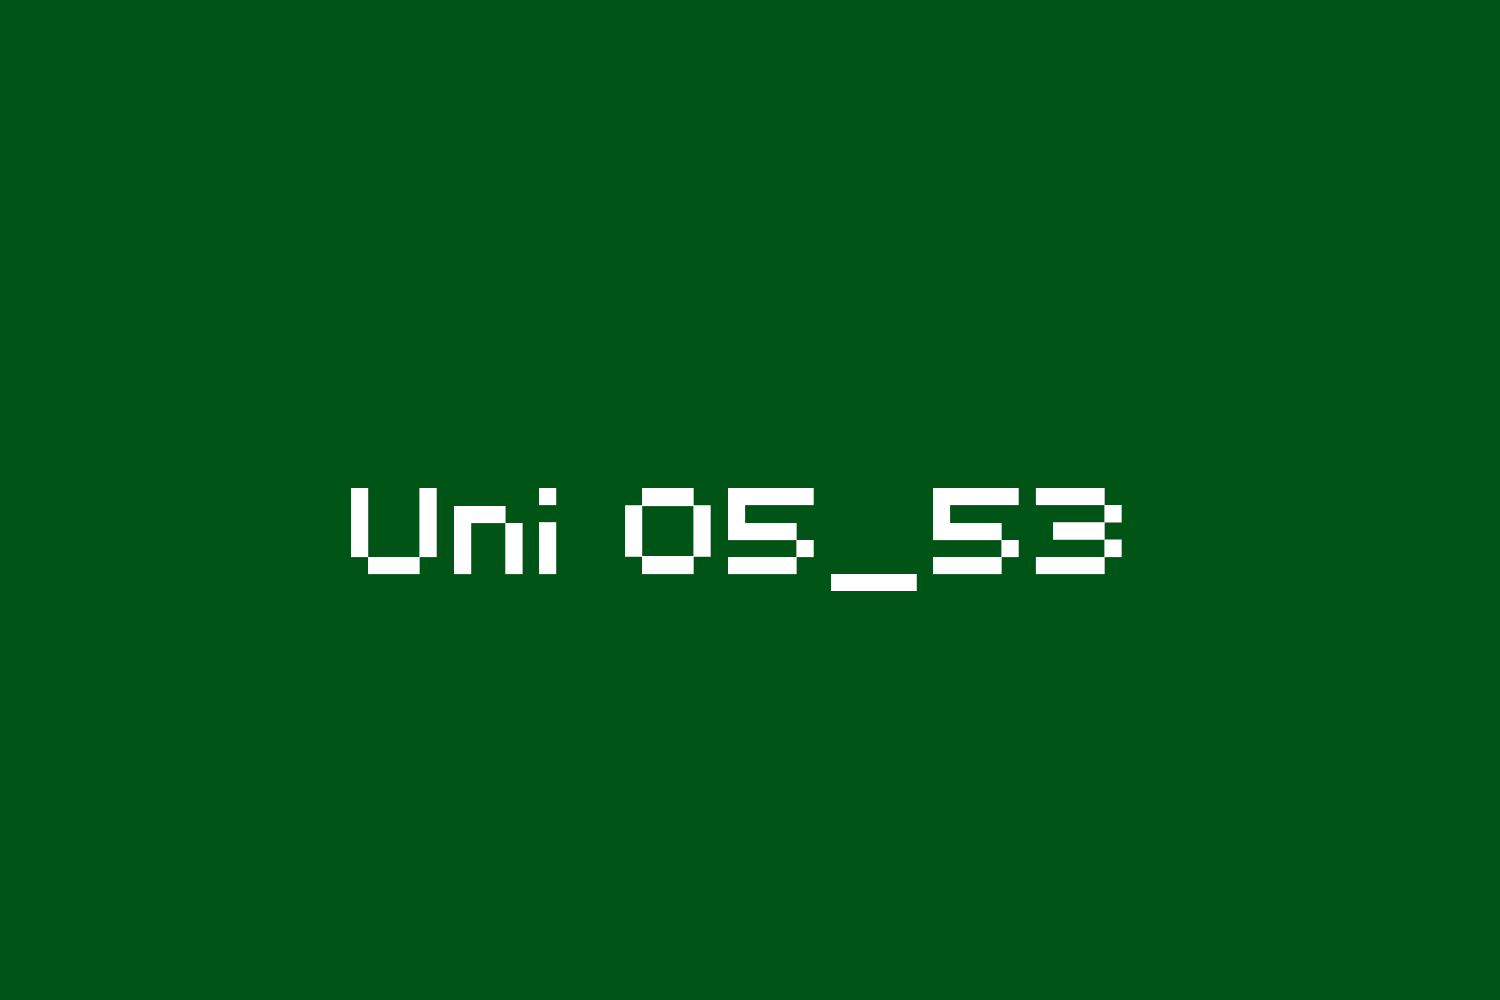 Uni 05_53